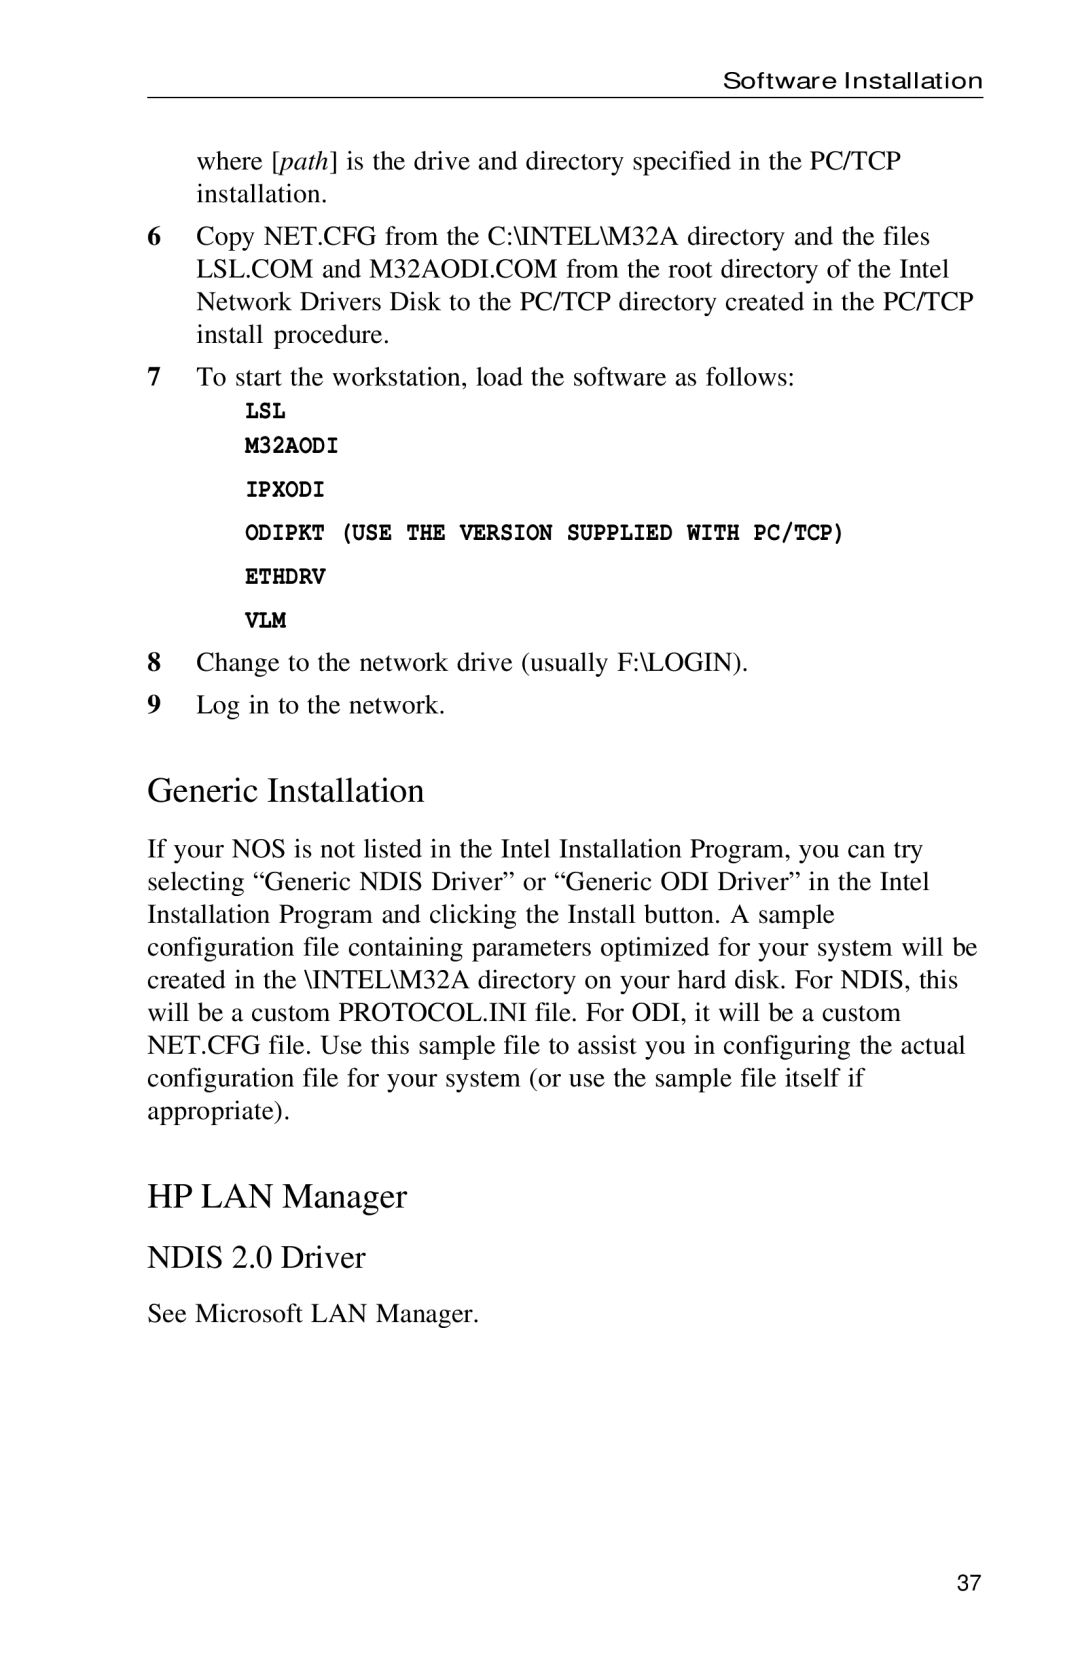 Intel PRO appendix Generic Installation, HP LAN Manager 